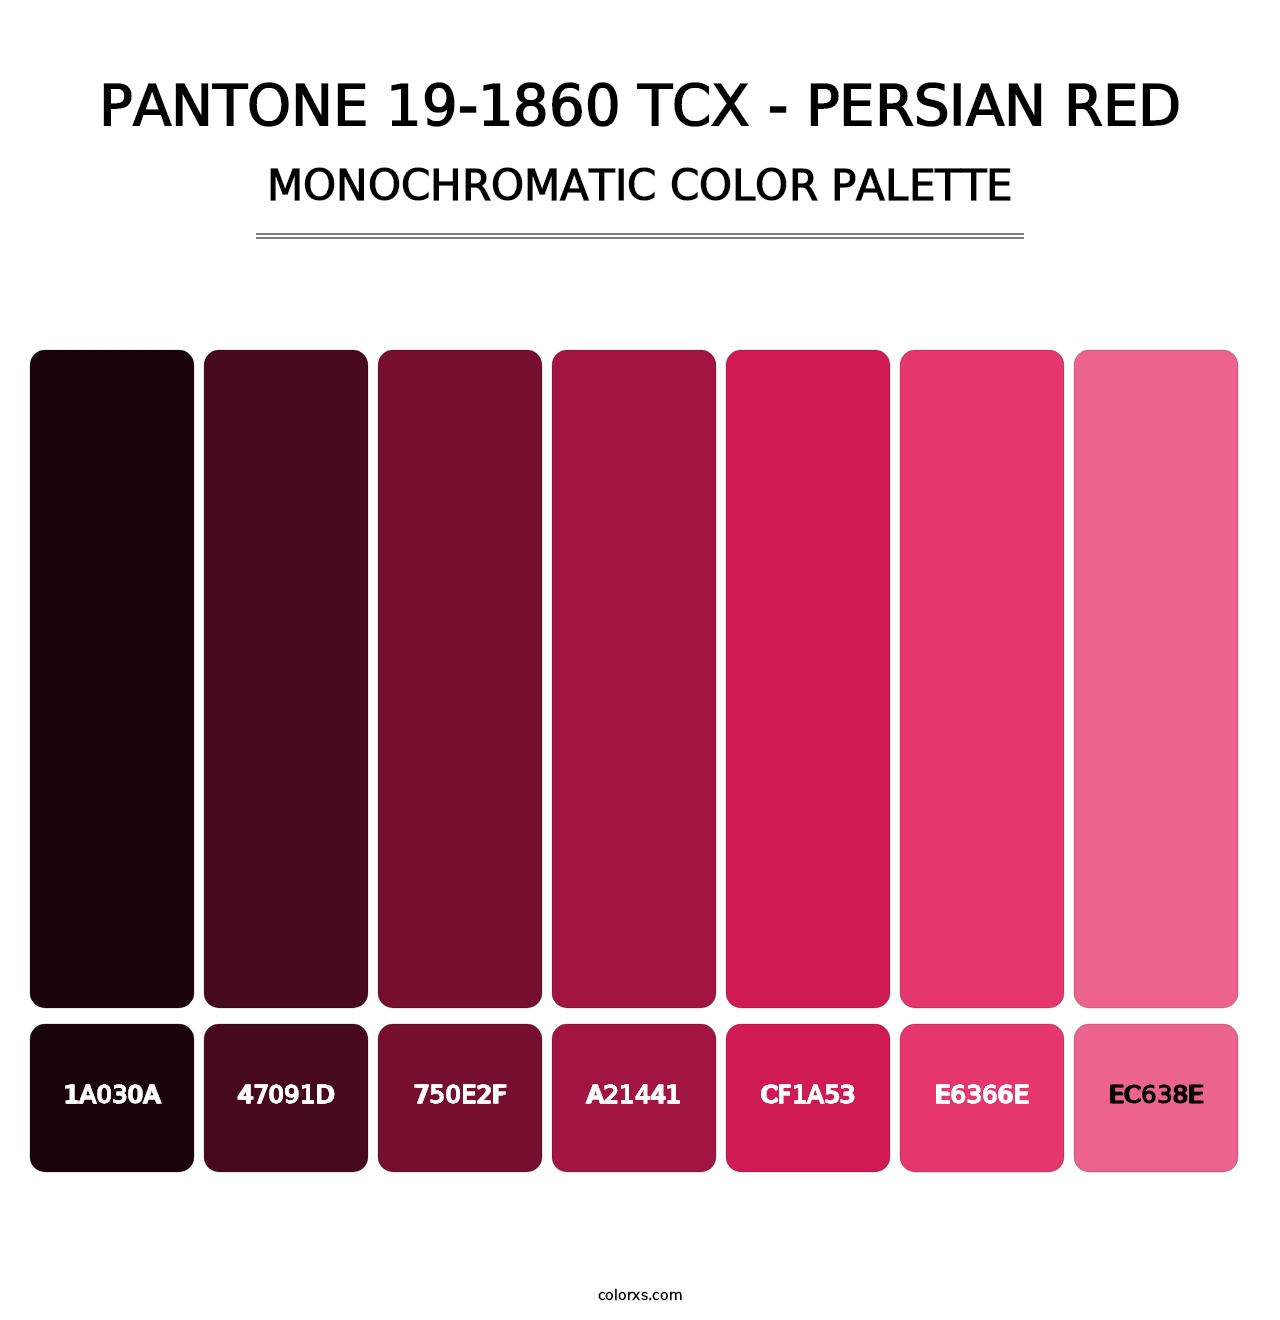 PANTONE 19-1860 TCX - Persian Red - Monochromatic Color Palette